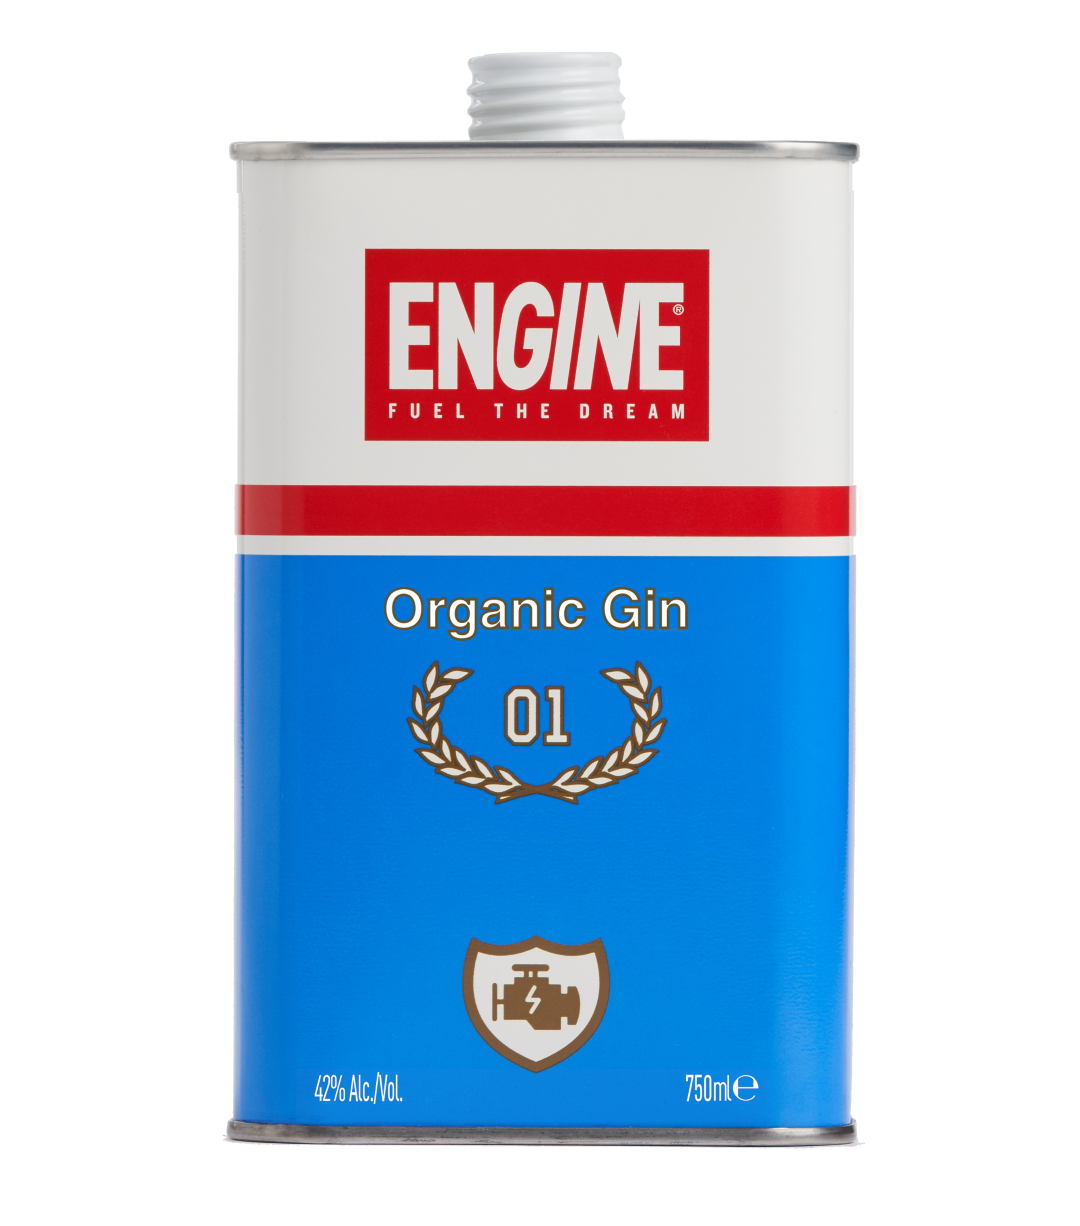 Engine Gin 700ml